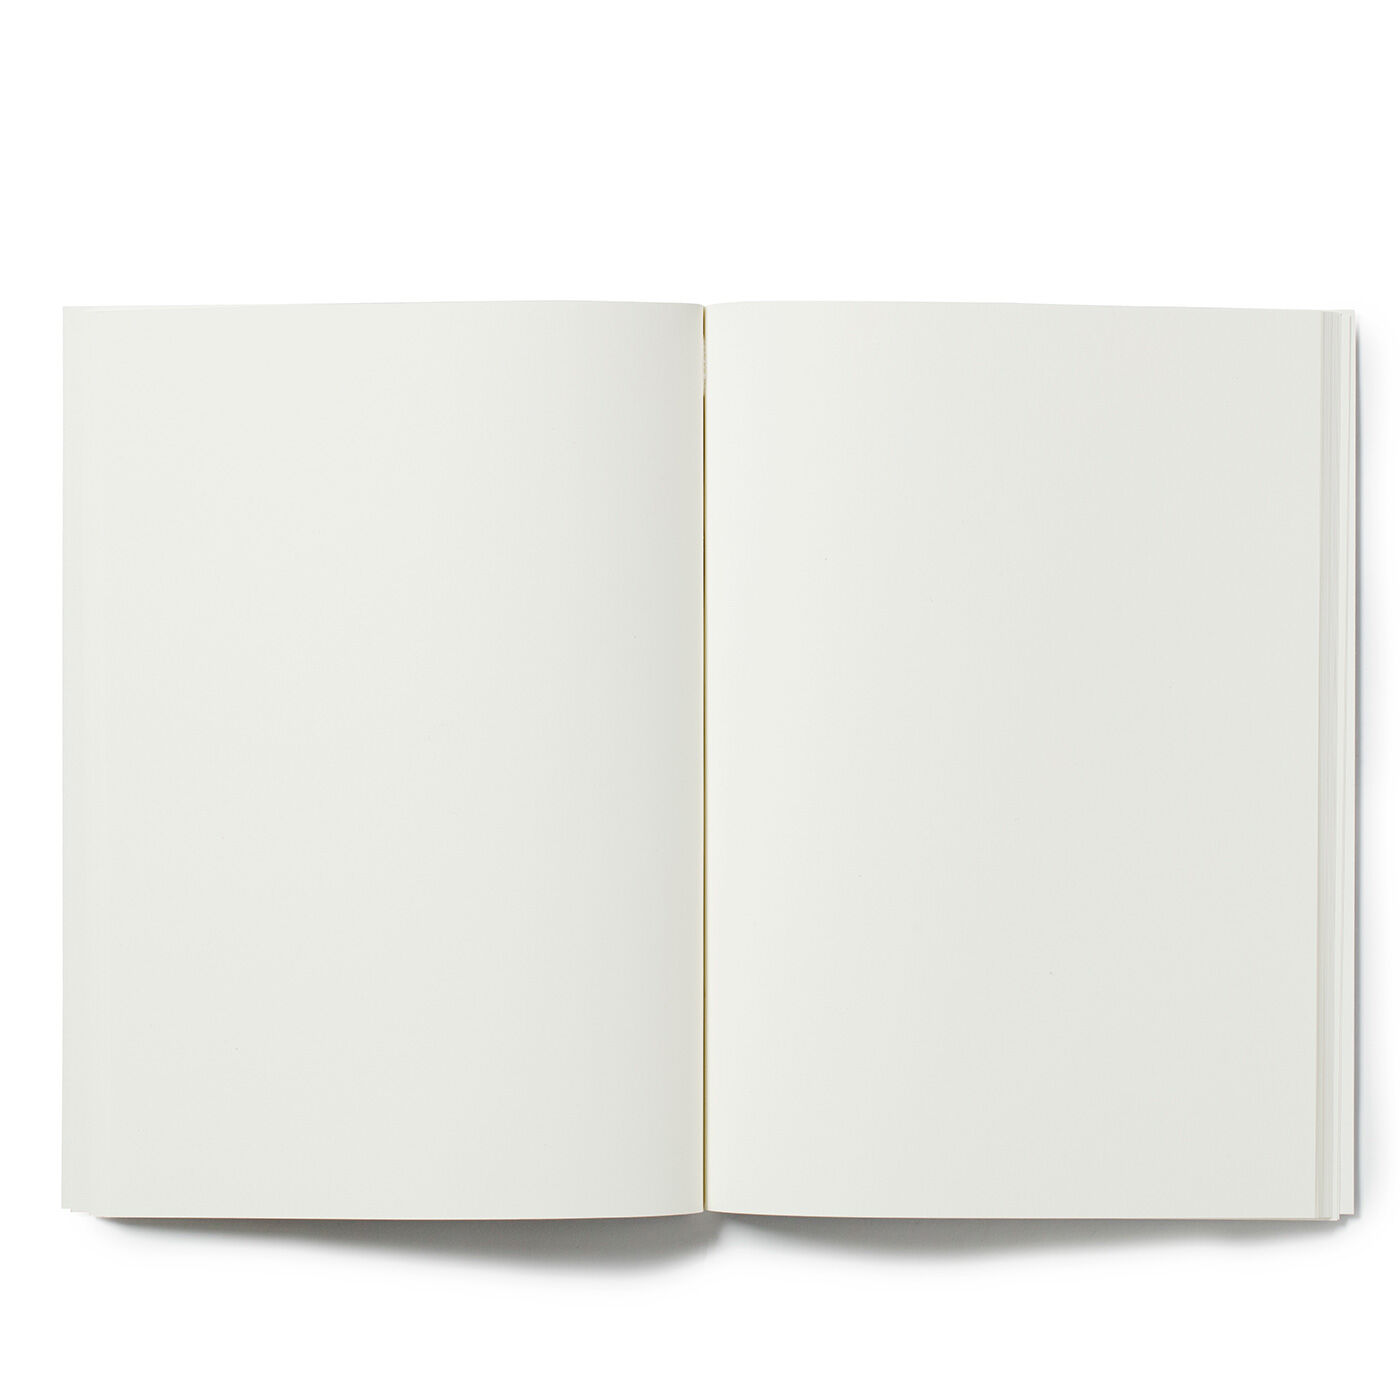 SeeMONO|北欧の豊かな森の木から作られたノート／ＫＡＴＯＴＥＫ　ＣＯＰＥＮＨＡＧＥＮ〈カトテックコペンハーゲン〉|こだわりのスカンジナビアペーパーを使用。